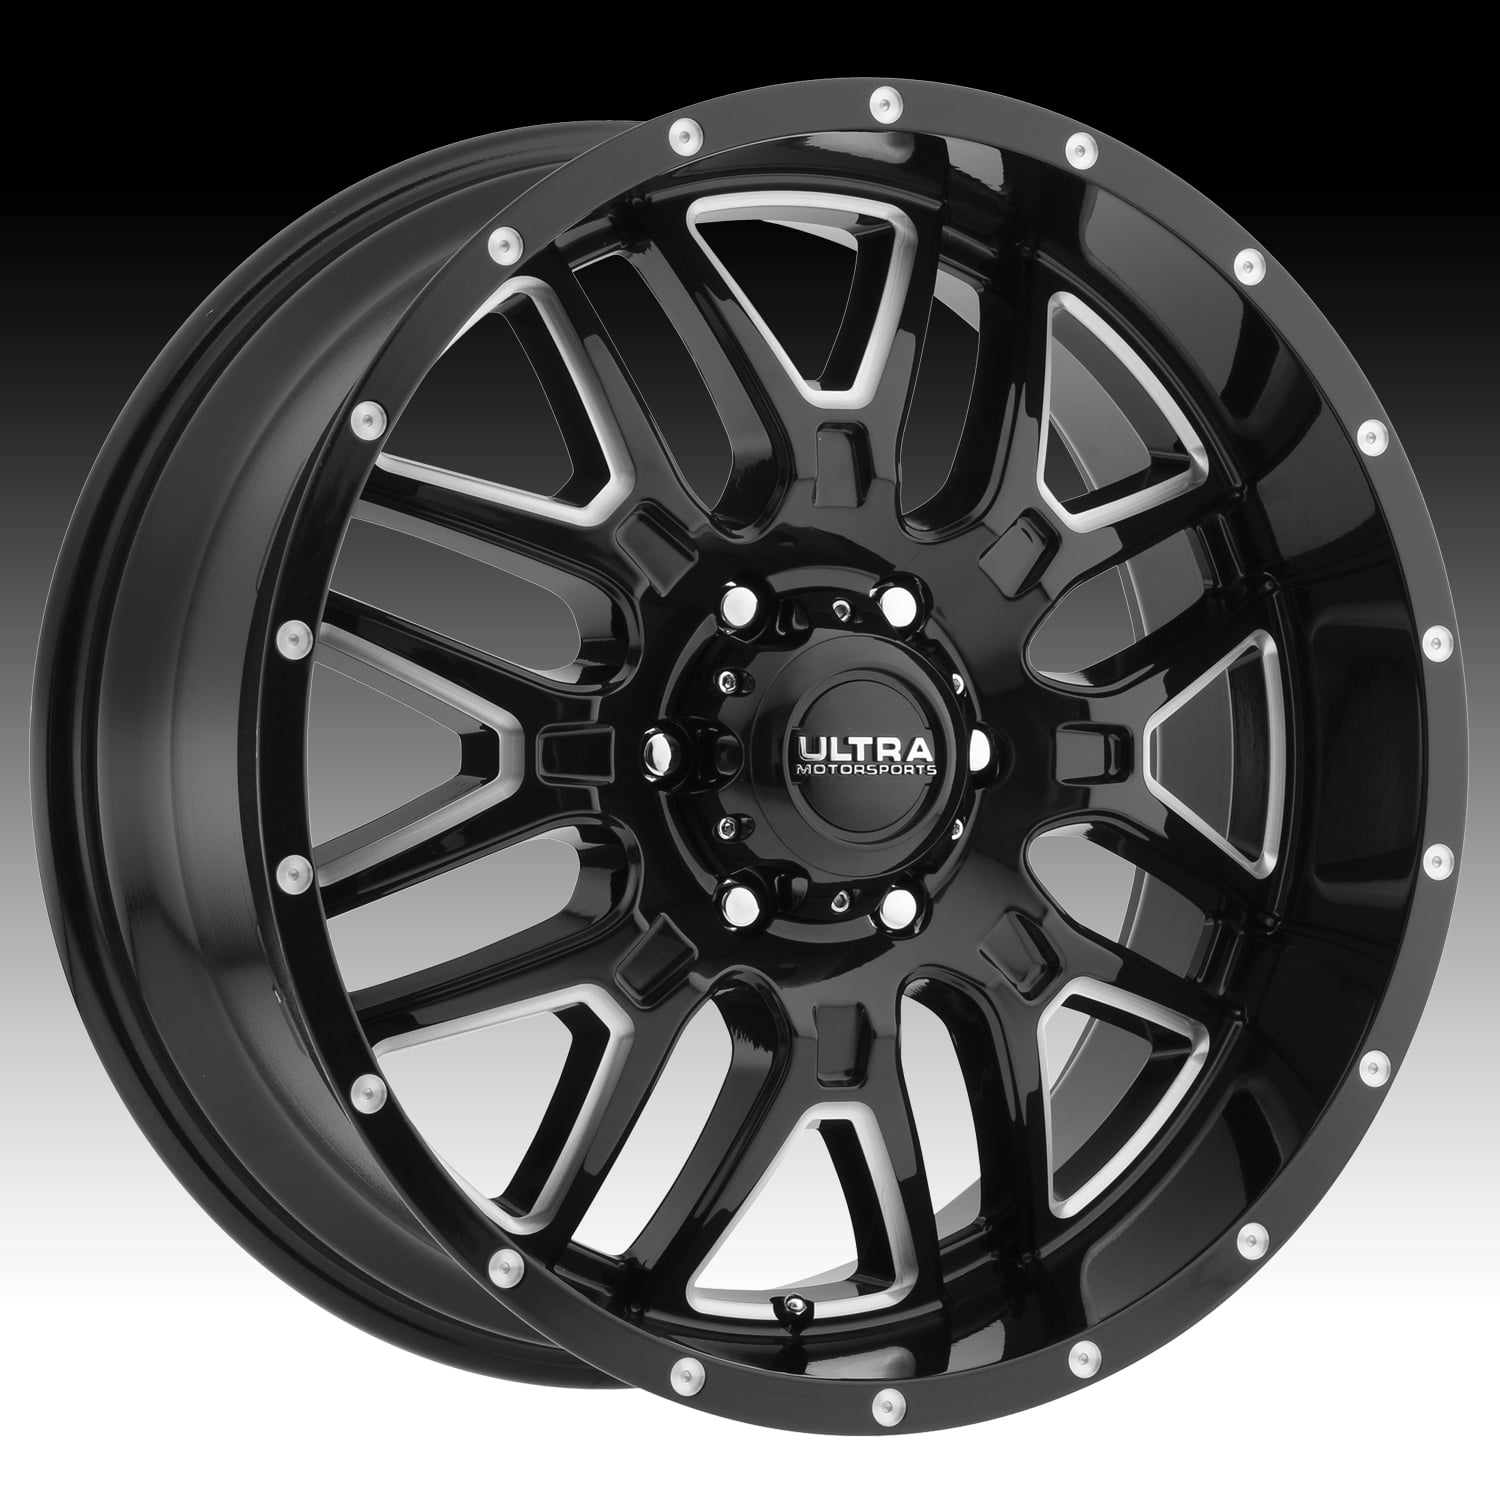 Ultra 203BM Hunter Wheel Automotive Rim, 17x9", 6x135mm, +18et, Gloss Black CNC Milled Accents Clear Coat